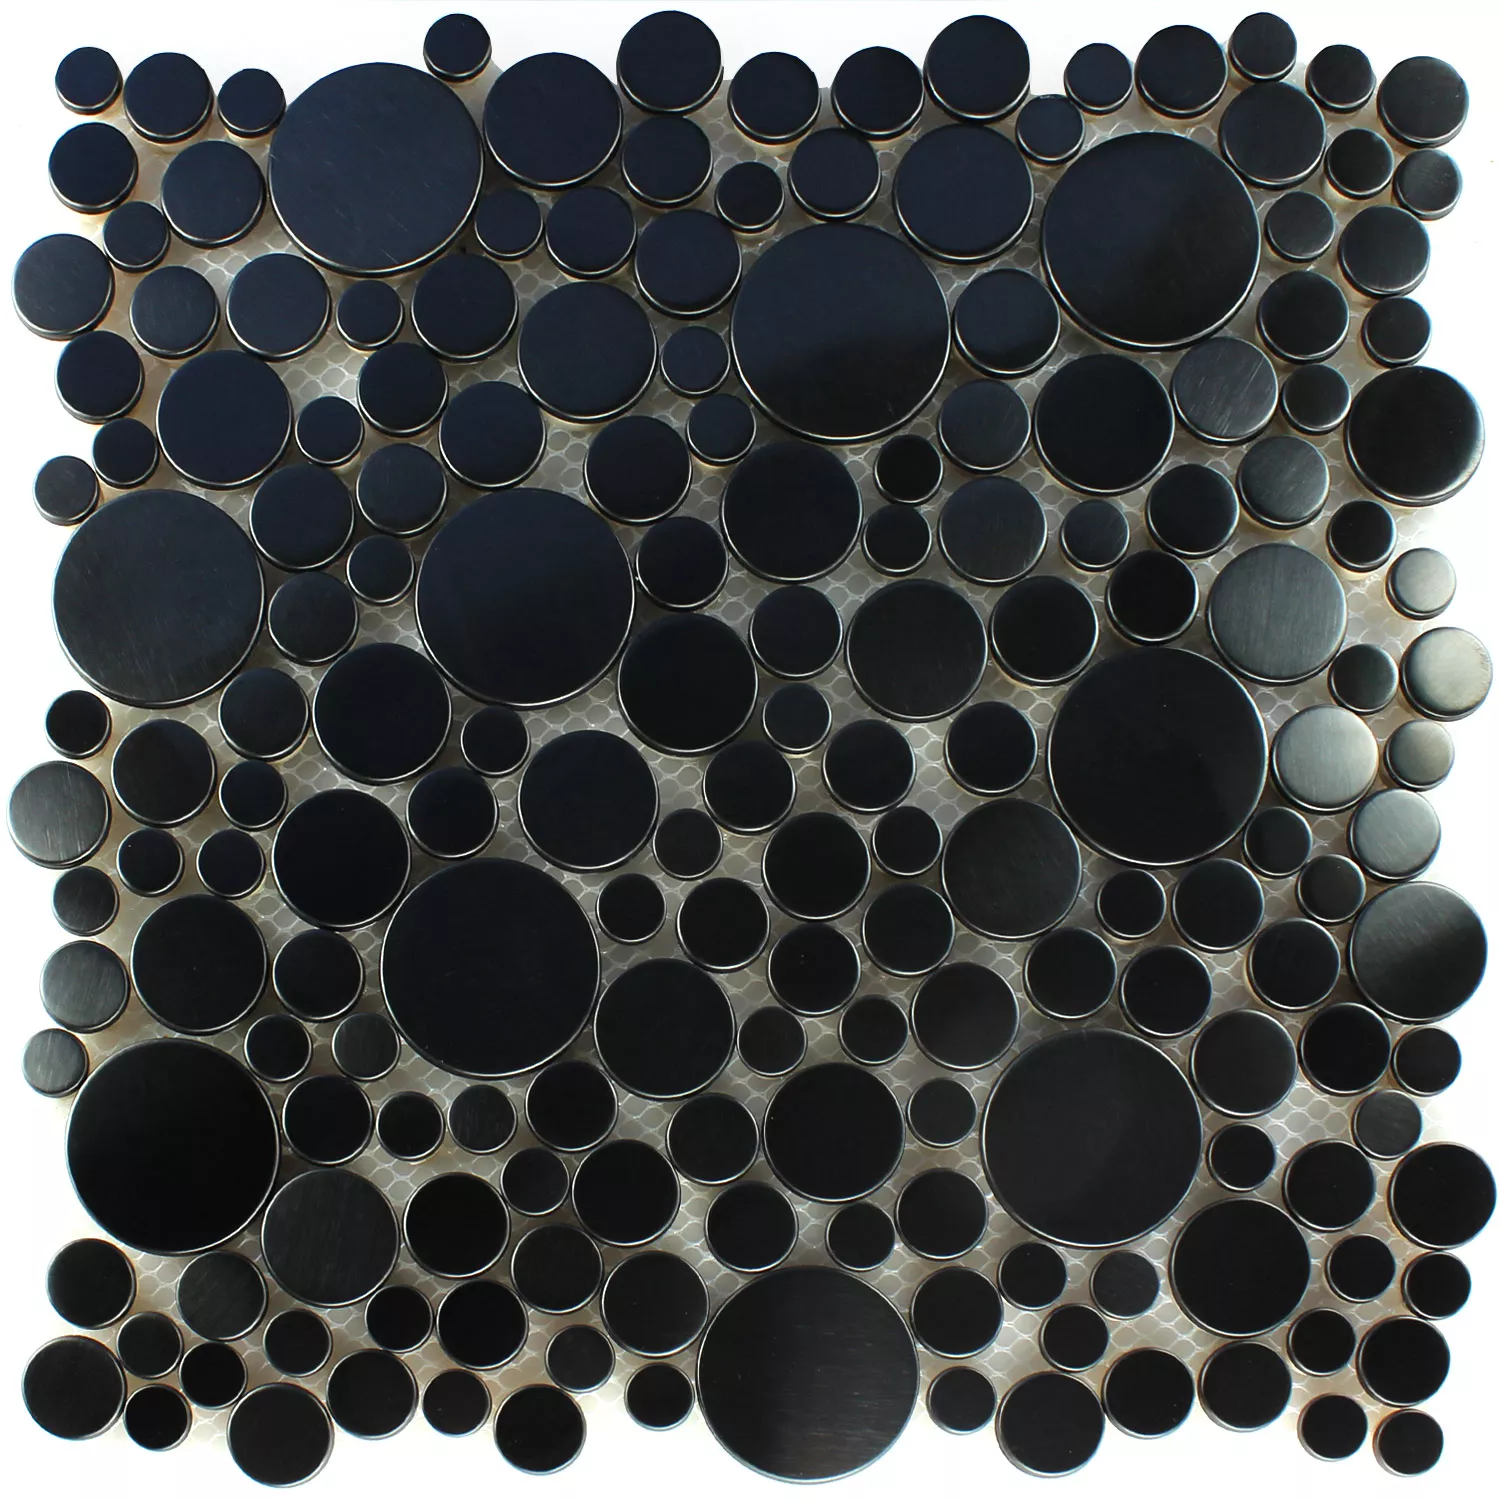 Sample Design Stainless Steel Pebble Mosaic Metal Black